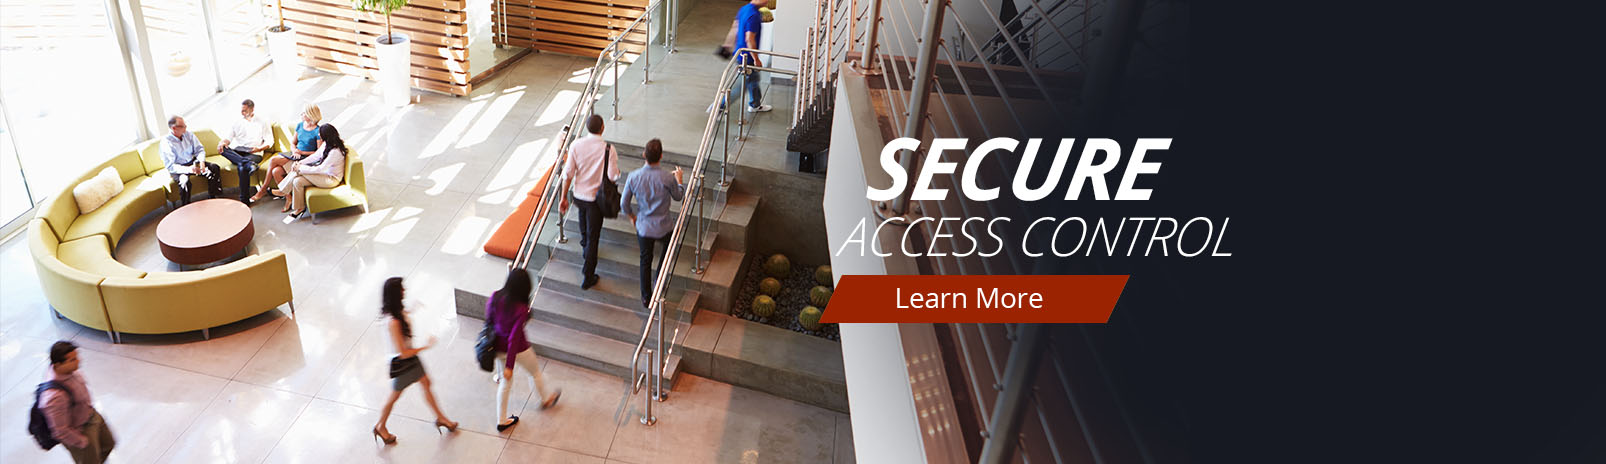 Secure Access Control